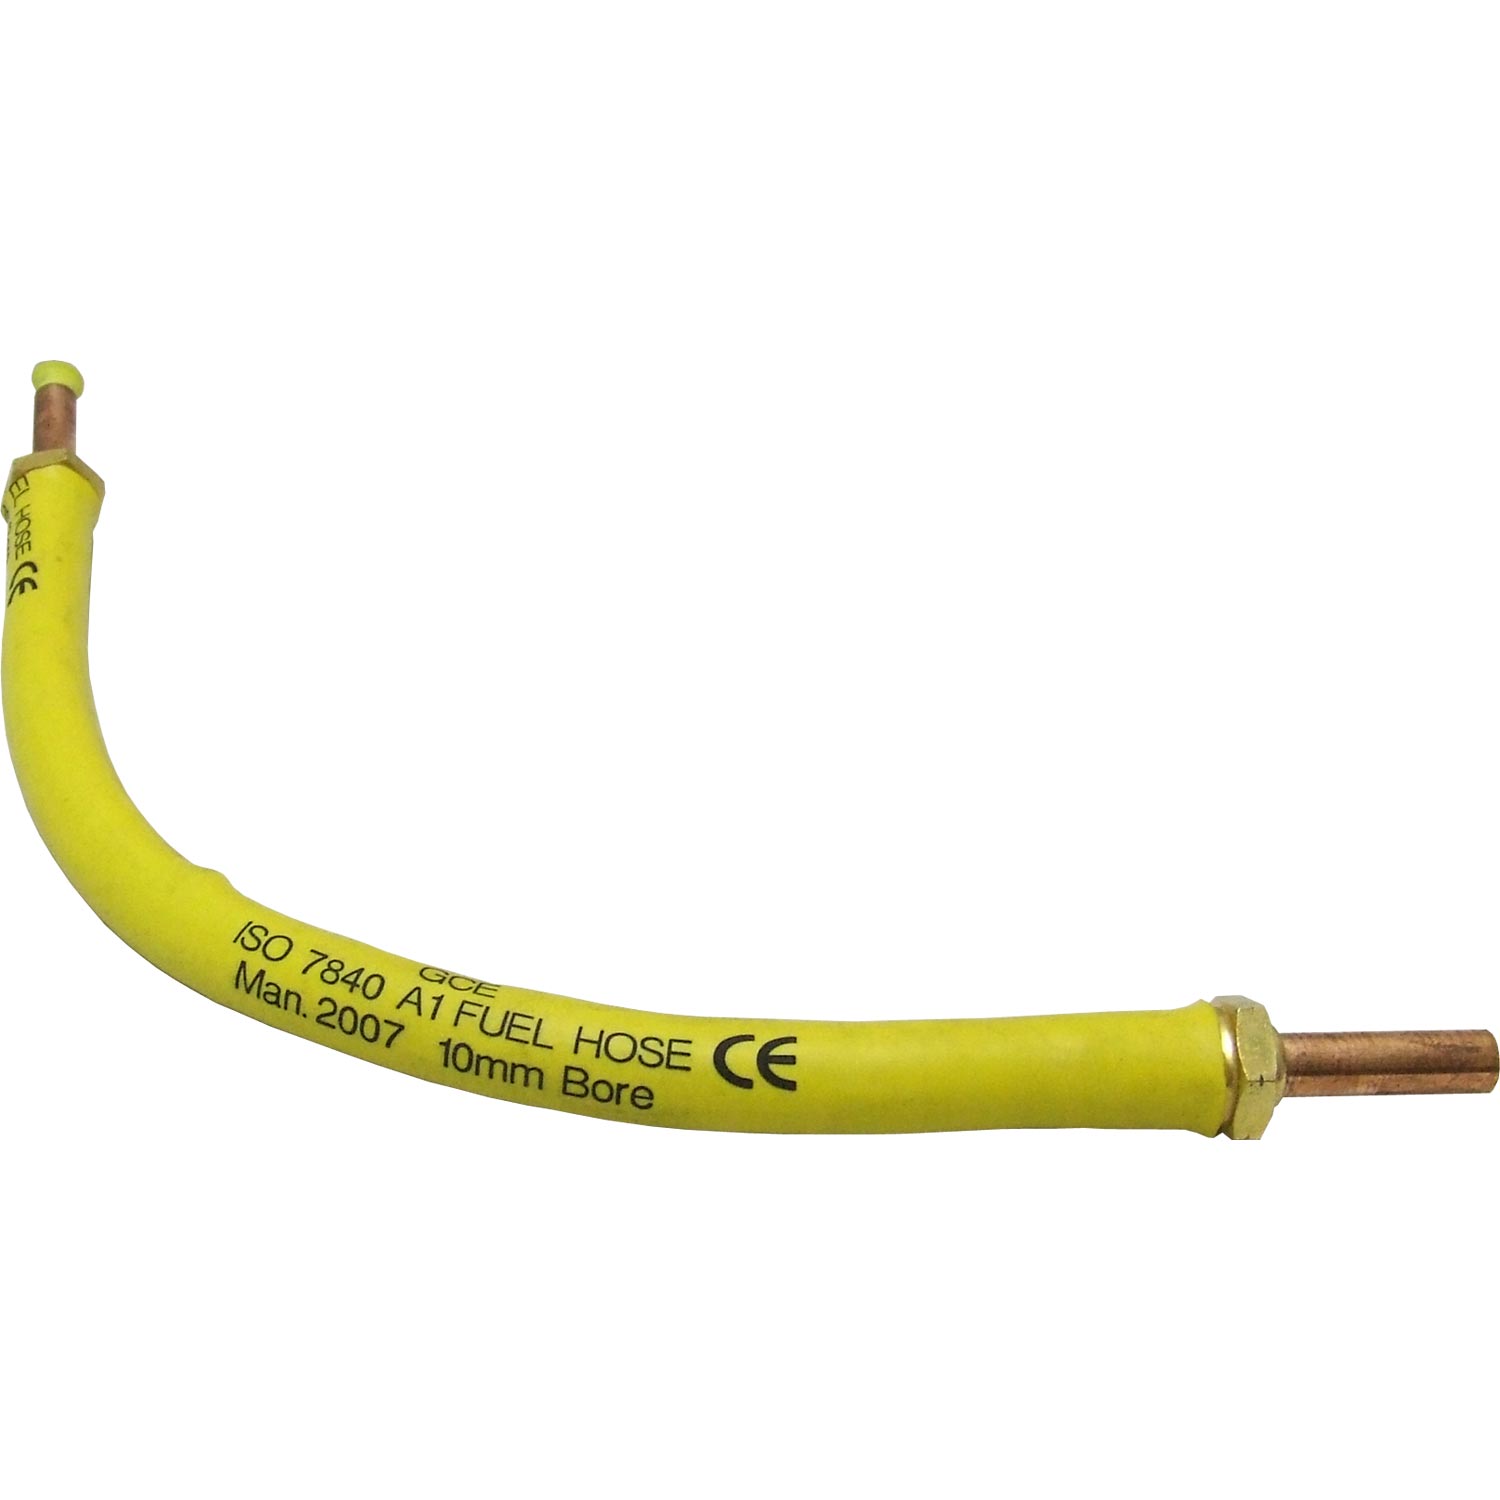 choose length  1-57800 Fire Resistant Marine fuel hose ISO7840 A1 6mm bore 